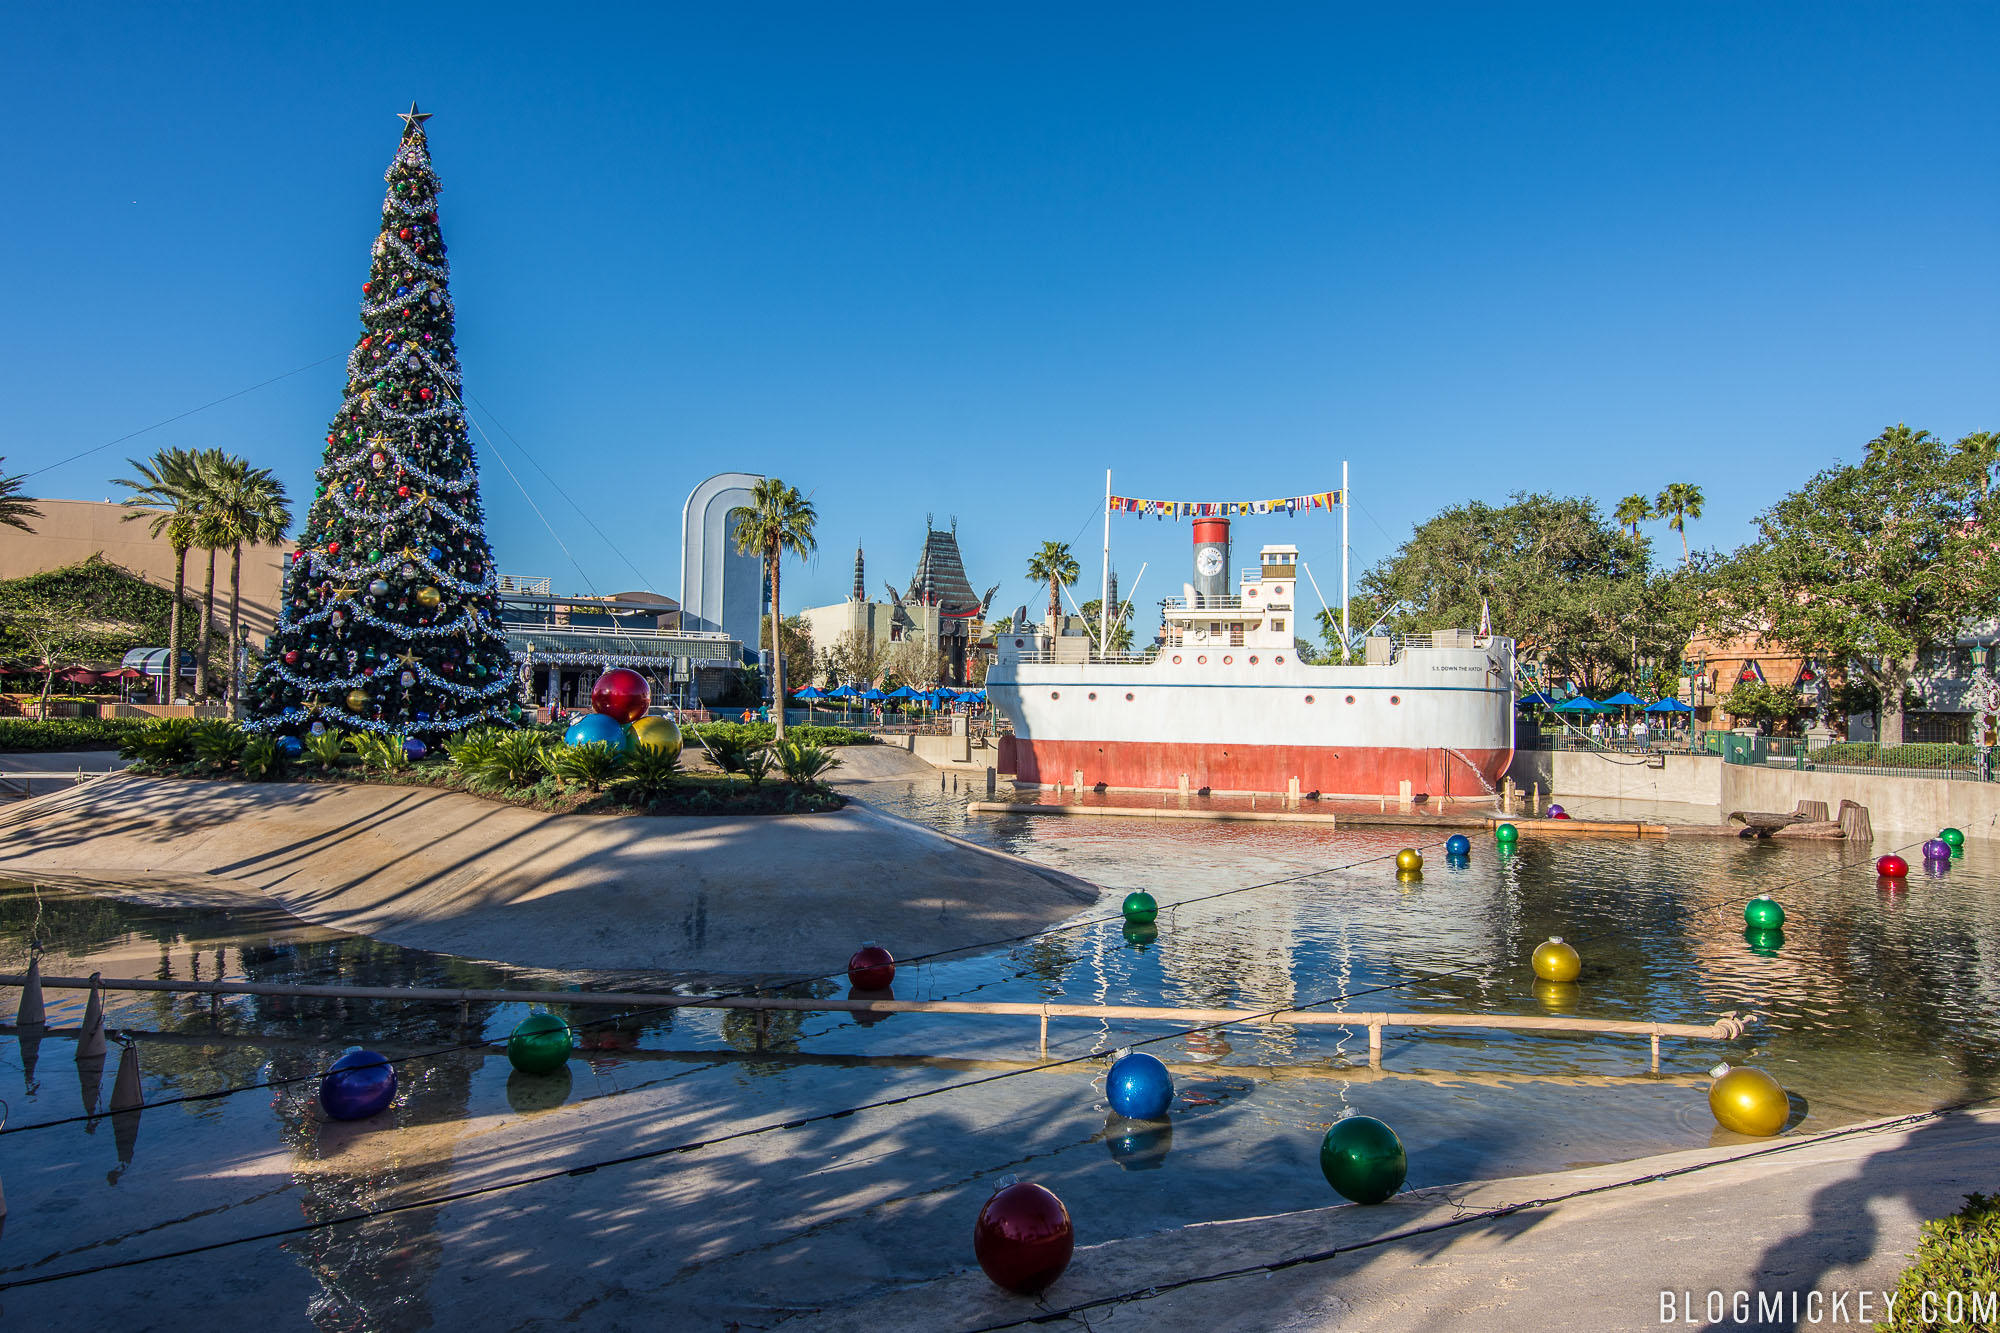 PHOTOS: Holiday Decorations Debut on Echo Lake at Disney's Hollywood